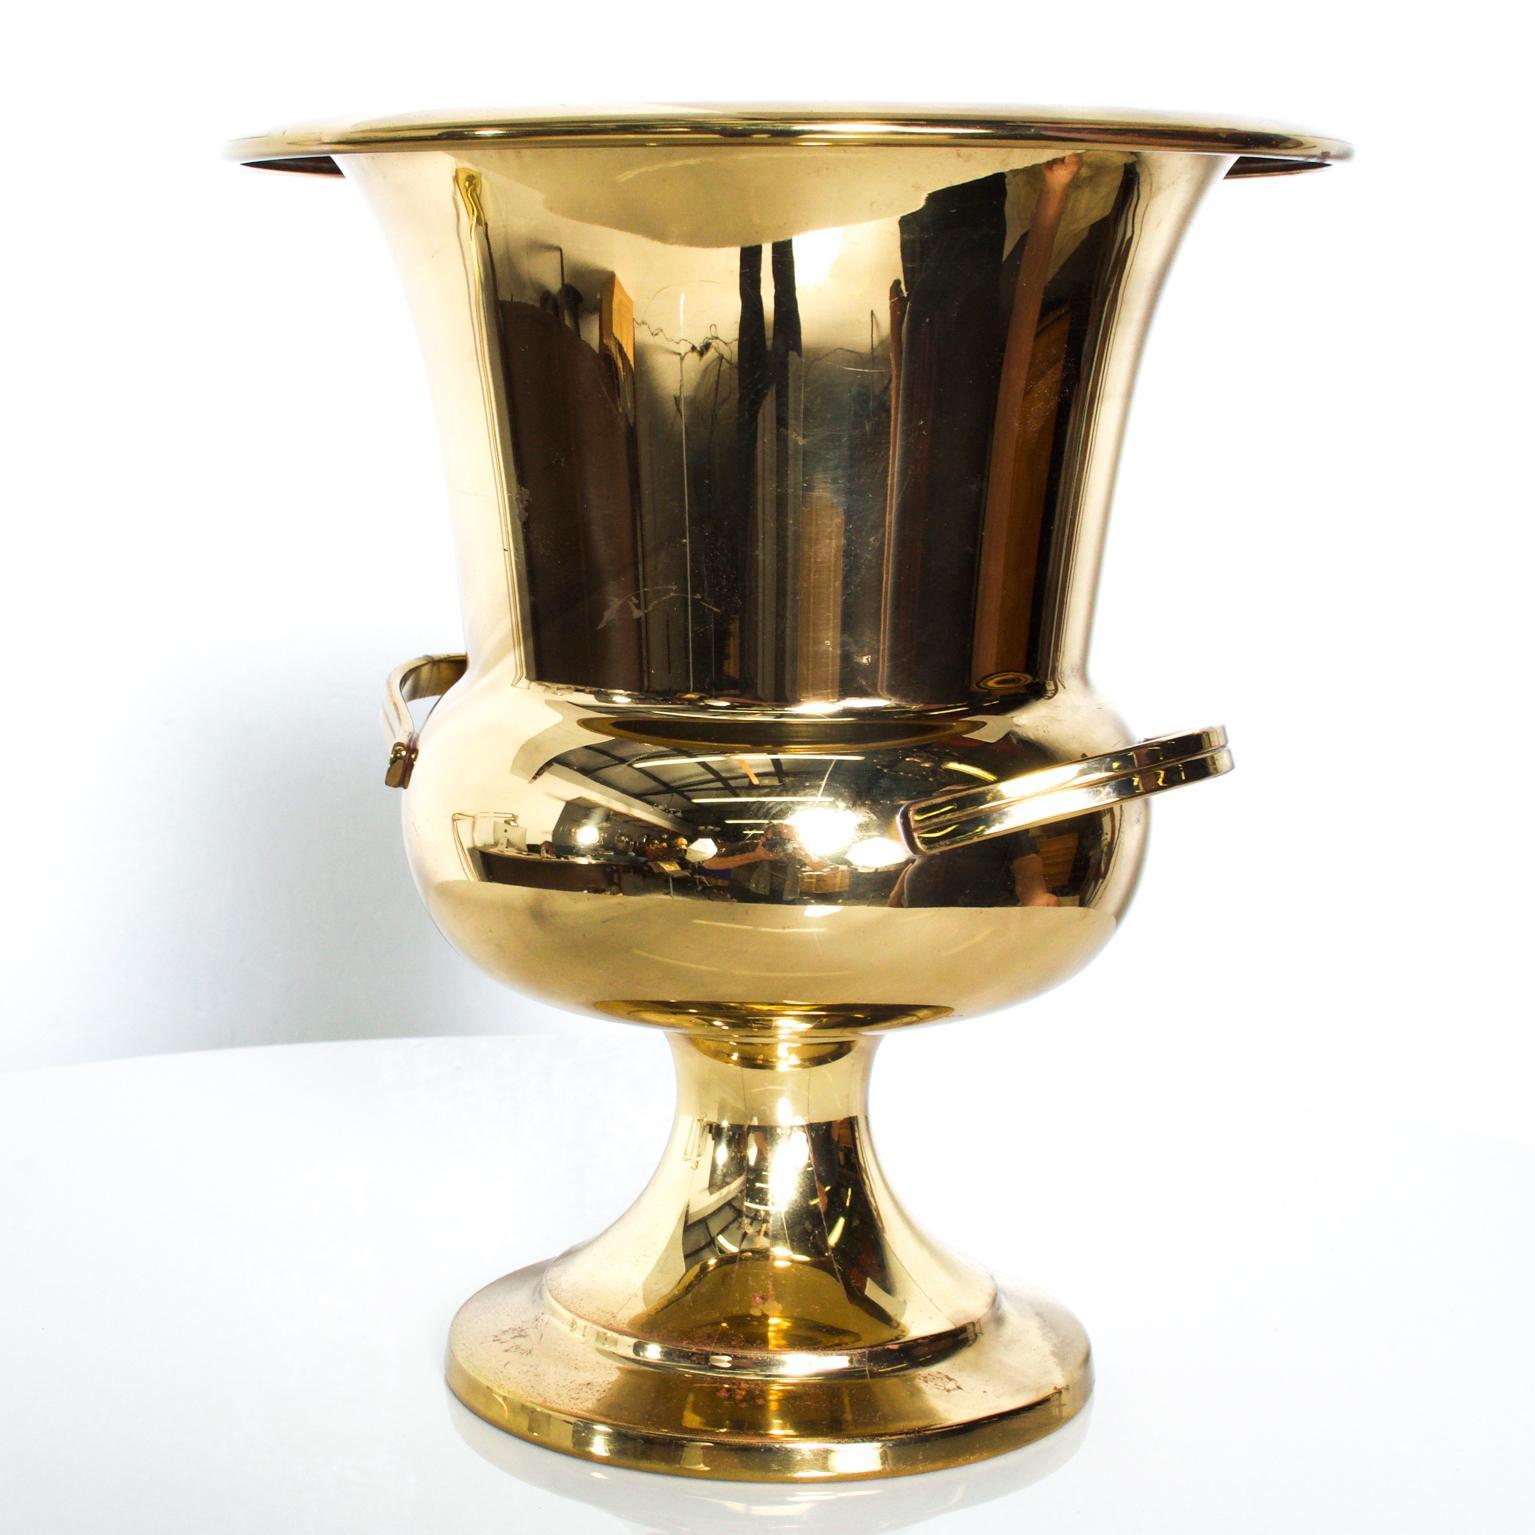 Brass Tommi Parzinger Golden Champagne Bucket, Wine Cooler, Ice Bucket   Mod 1960s